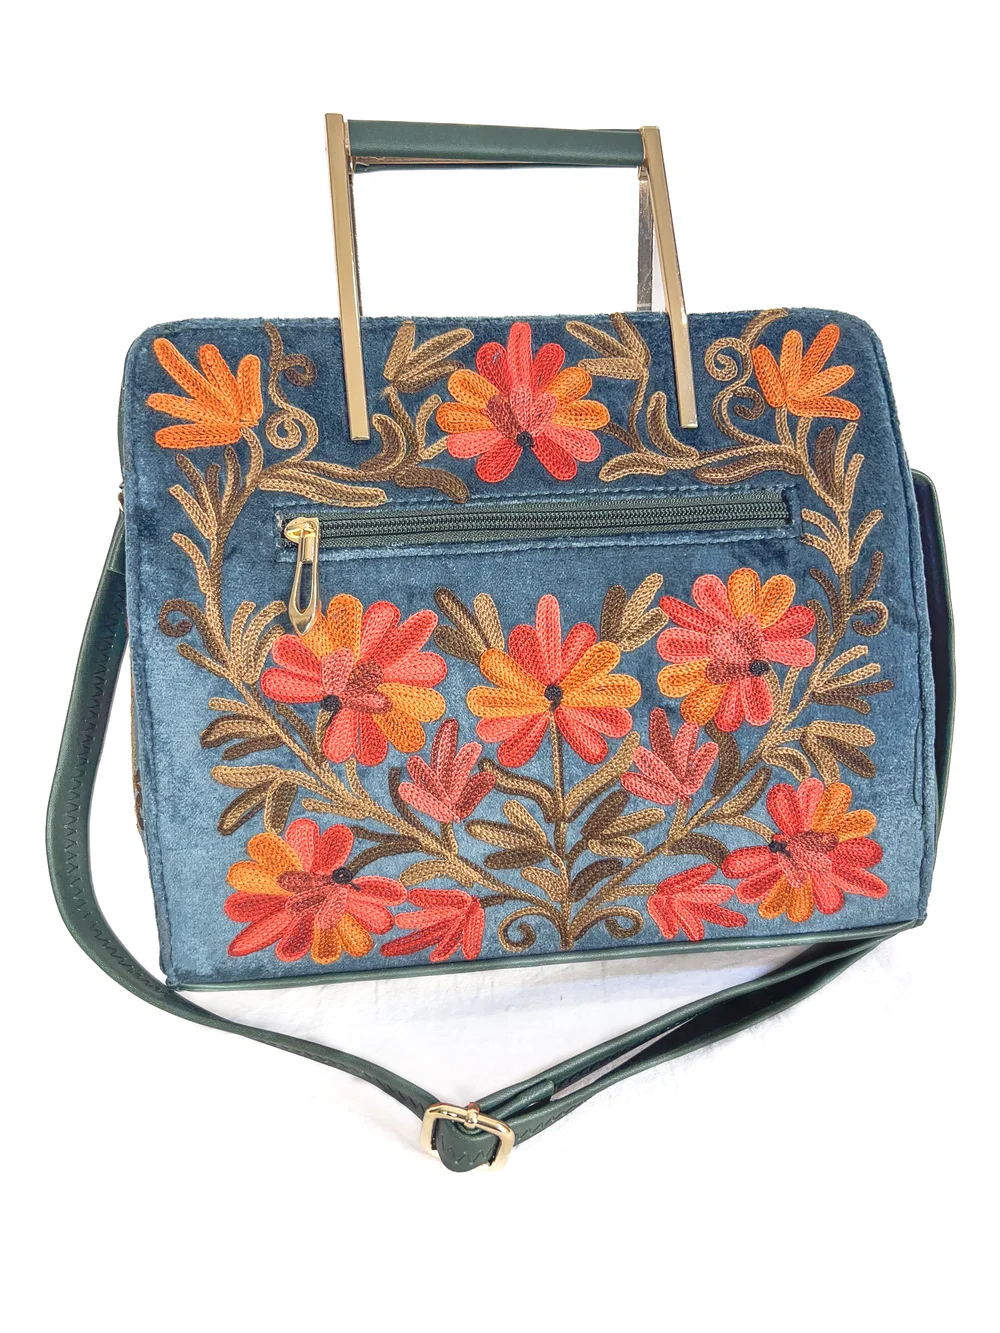 GOLD Zardosi Metal Box clutch Sling bag Zardosi embroidered, Bag purse,  zardozi Hand Work Handbag Women's